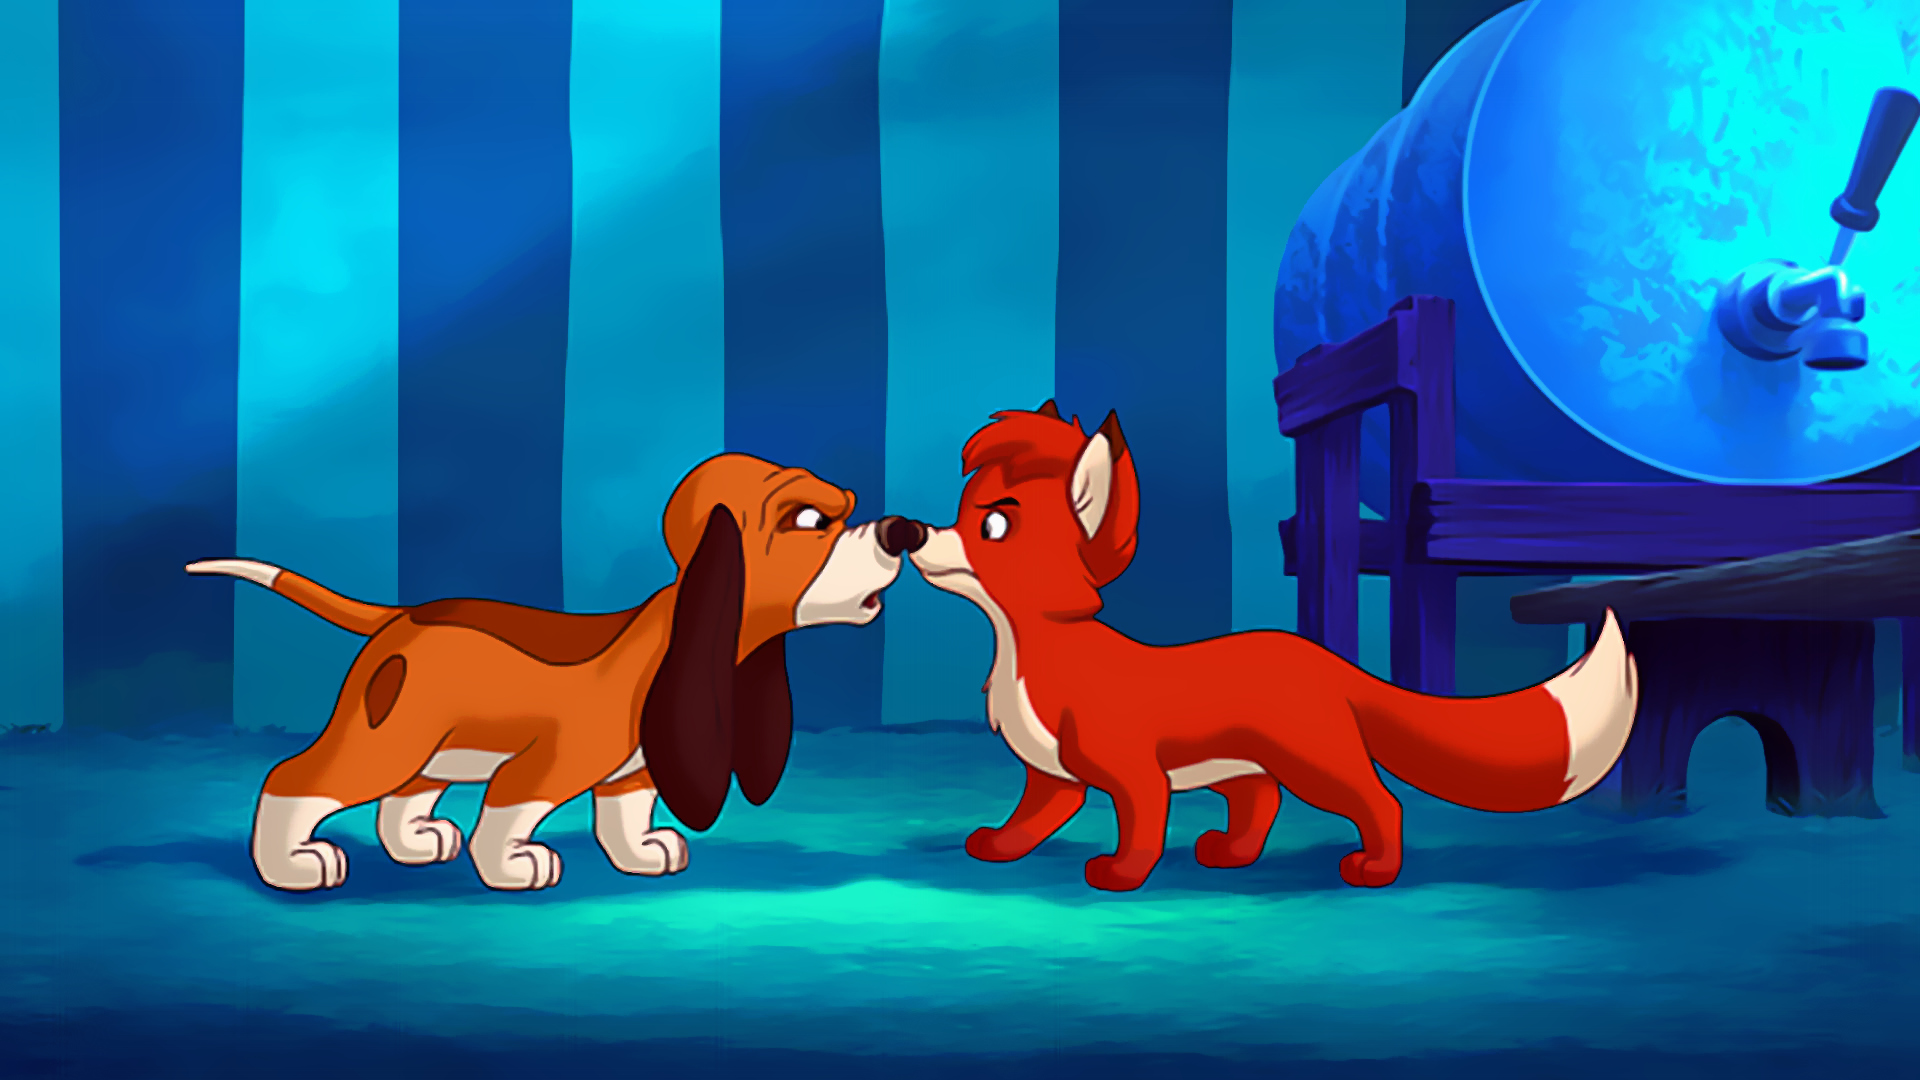 电 影 The Fox and the Hound 2 高 清 壁 纸 桌 面 背 景.